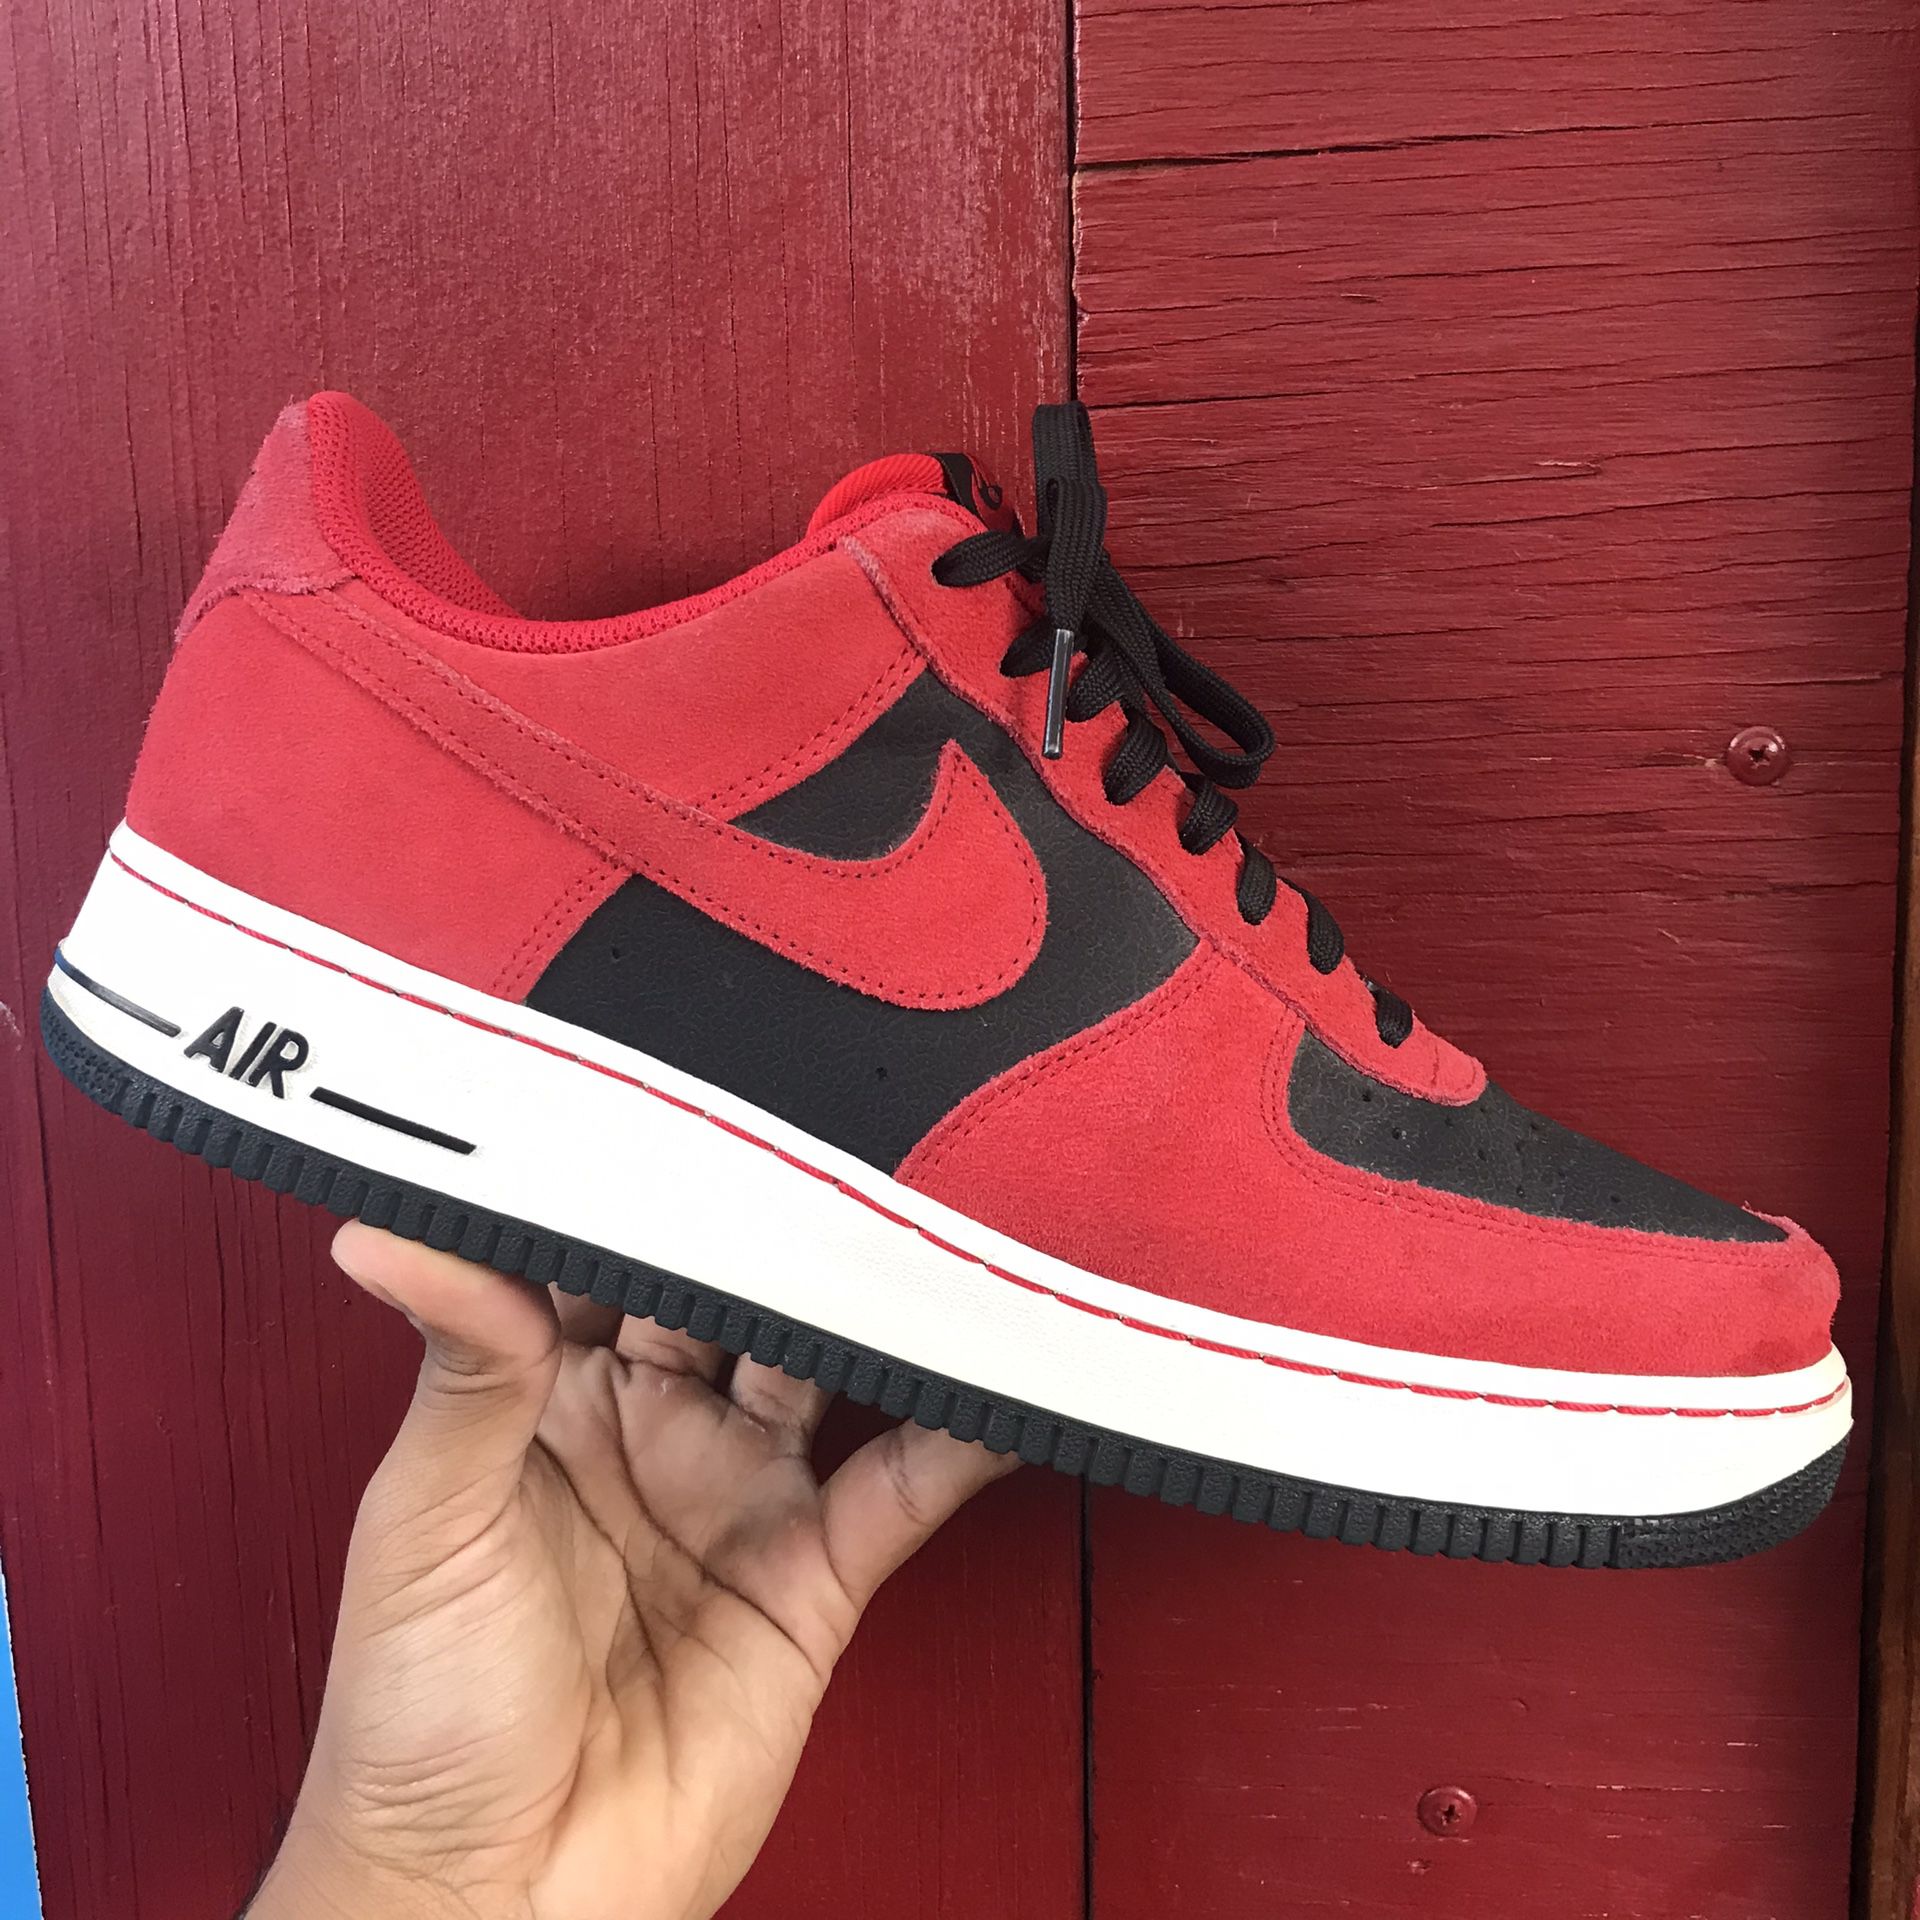 Nike AirForce1 Red & black